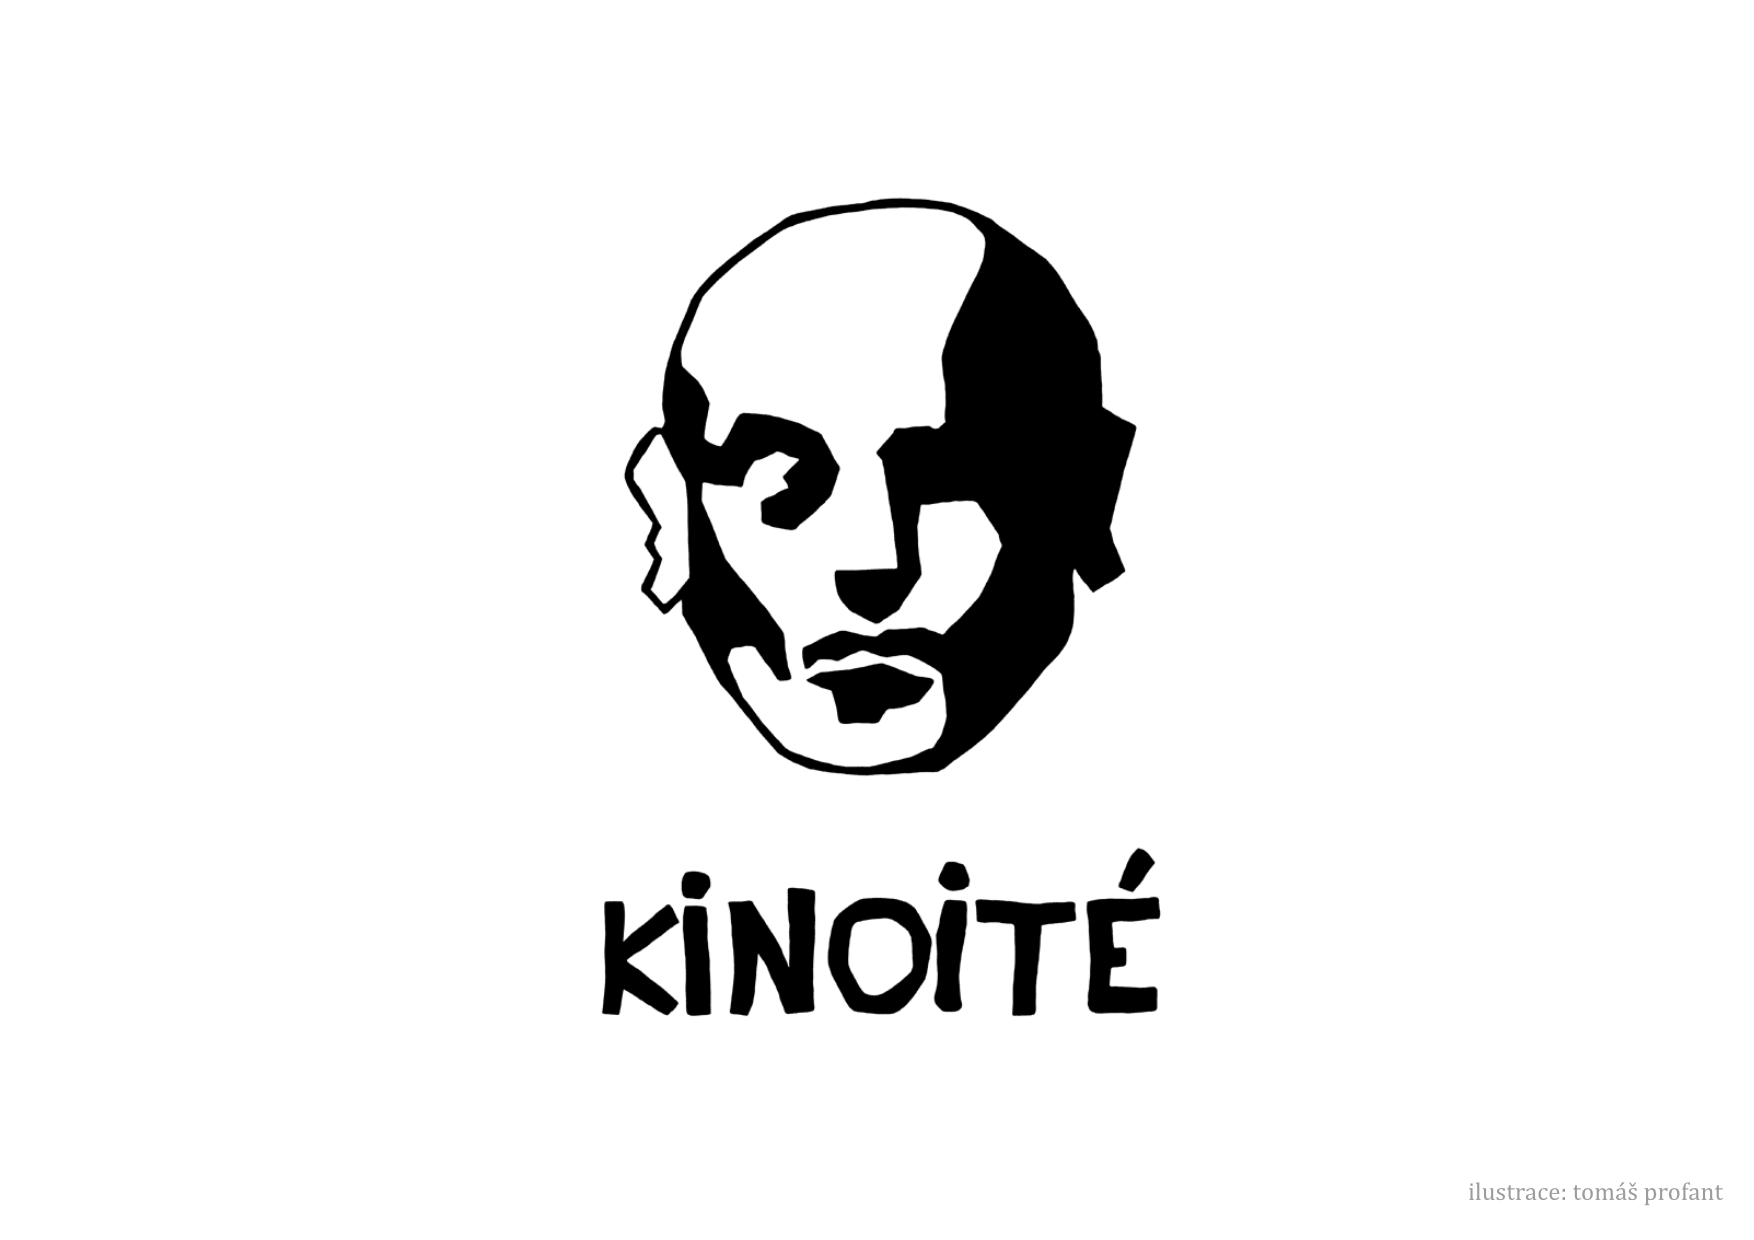 _images/kinoite-str%C3%A1nka001.png